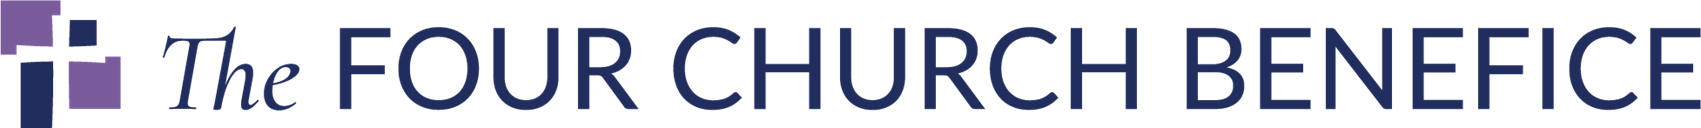 Four Church Benefice Logo